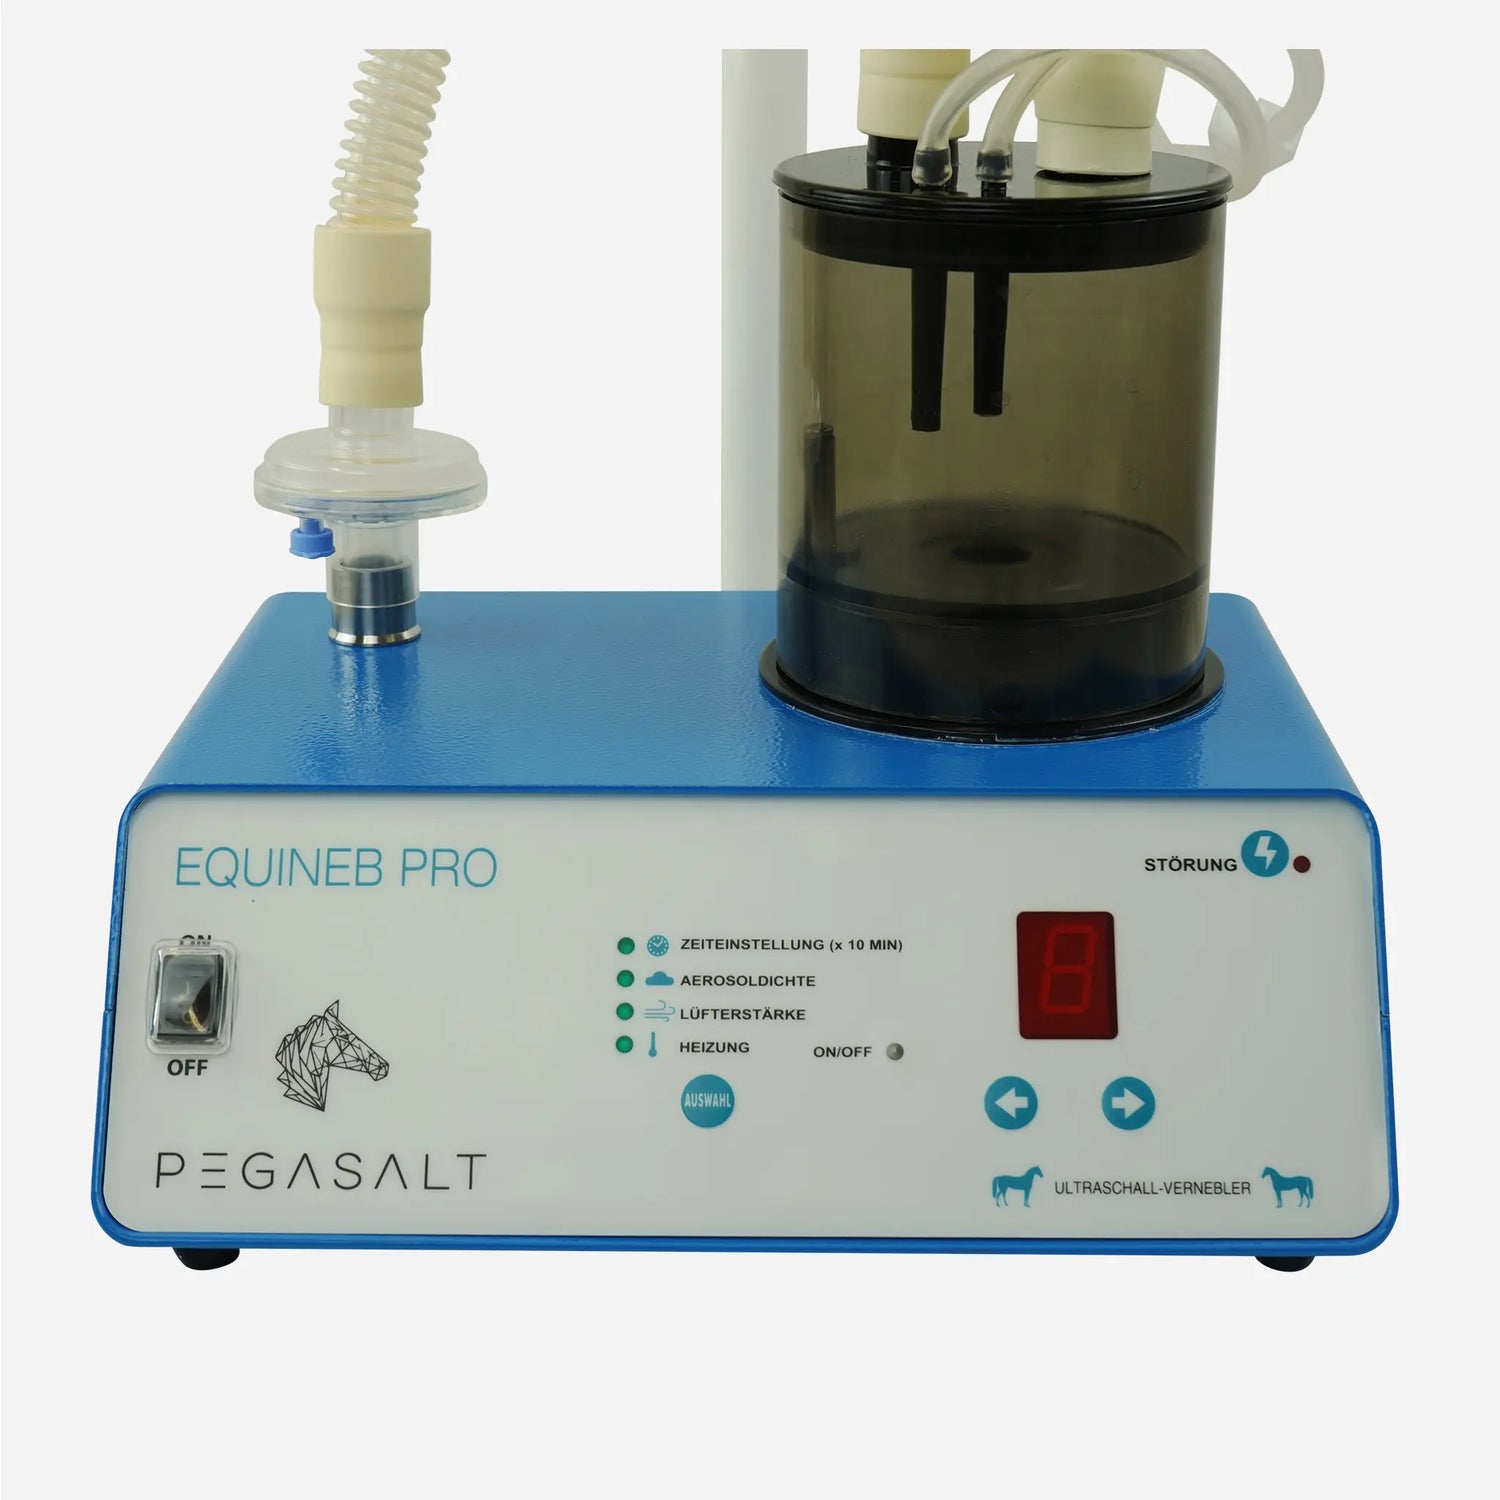 Equineb Pro | Ultraschall-Vernebler & Pferdeinhalator für mobile Solekammern | PEGASALT